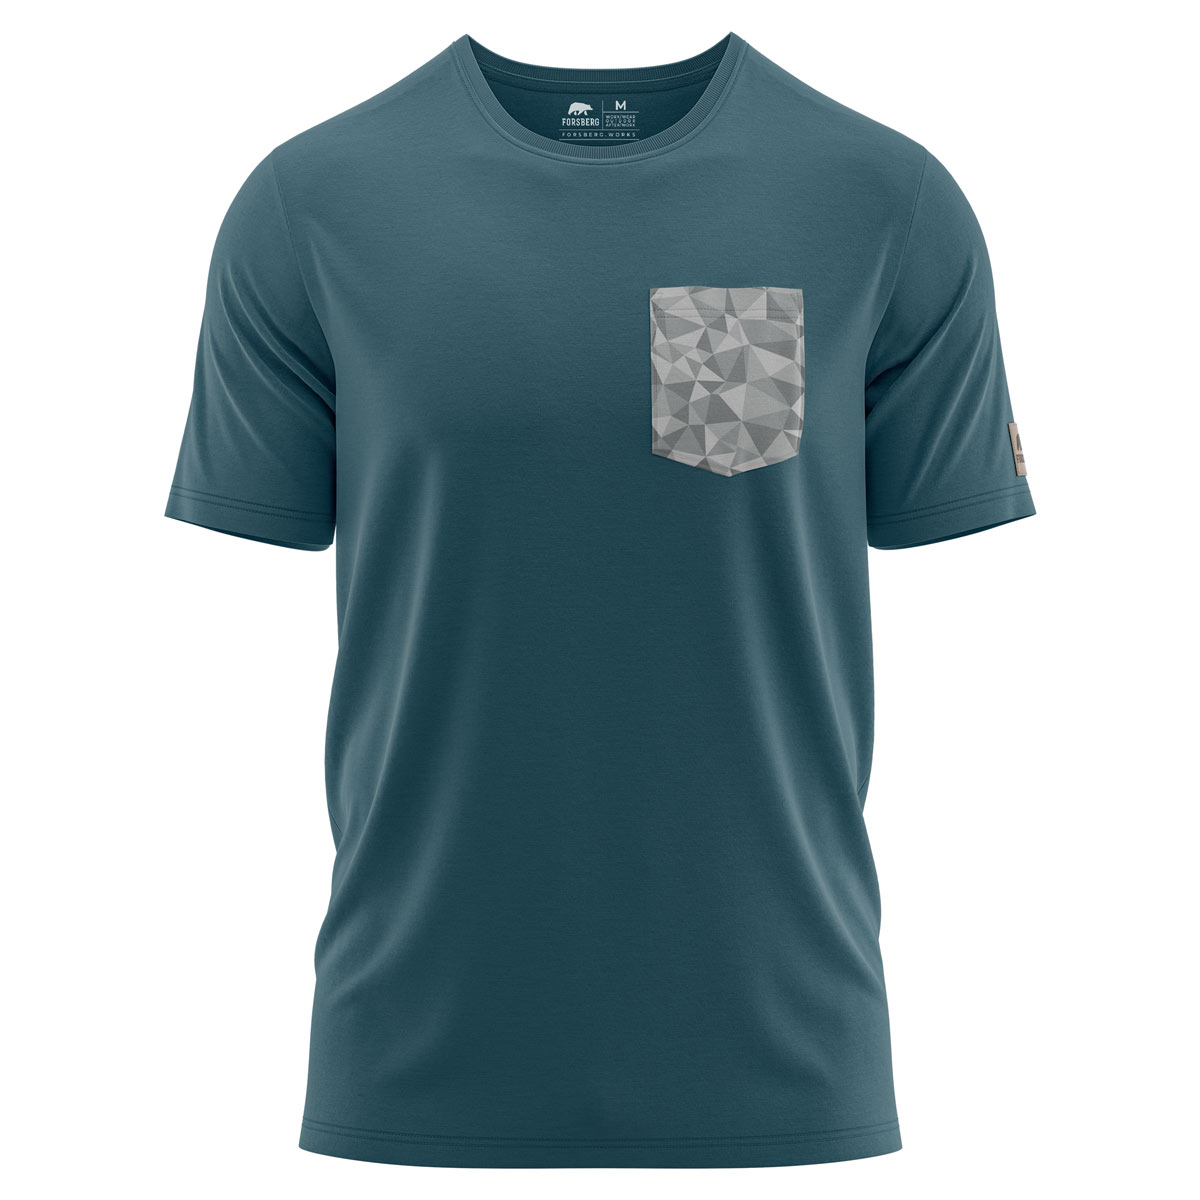 FORSBERG T-shirt with chest pocket in polygonal design white, petrol ...